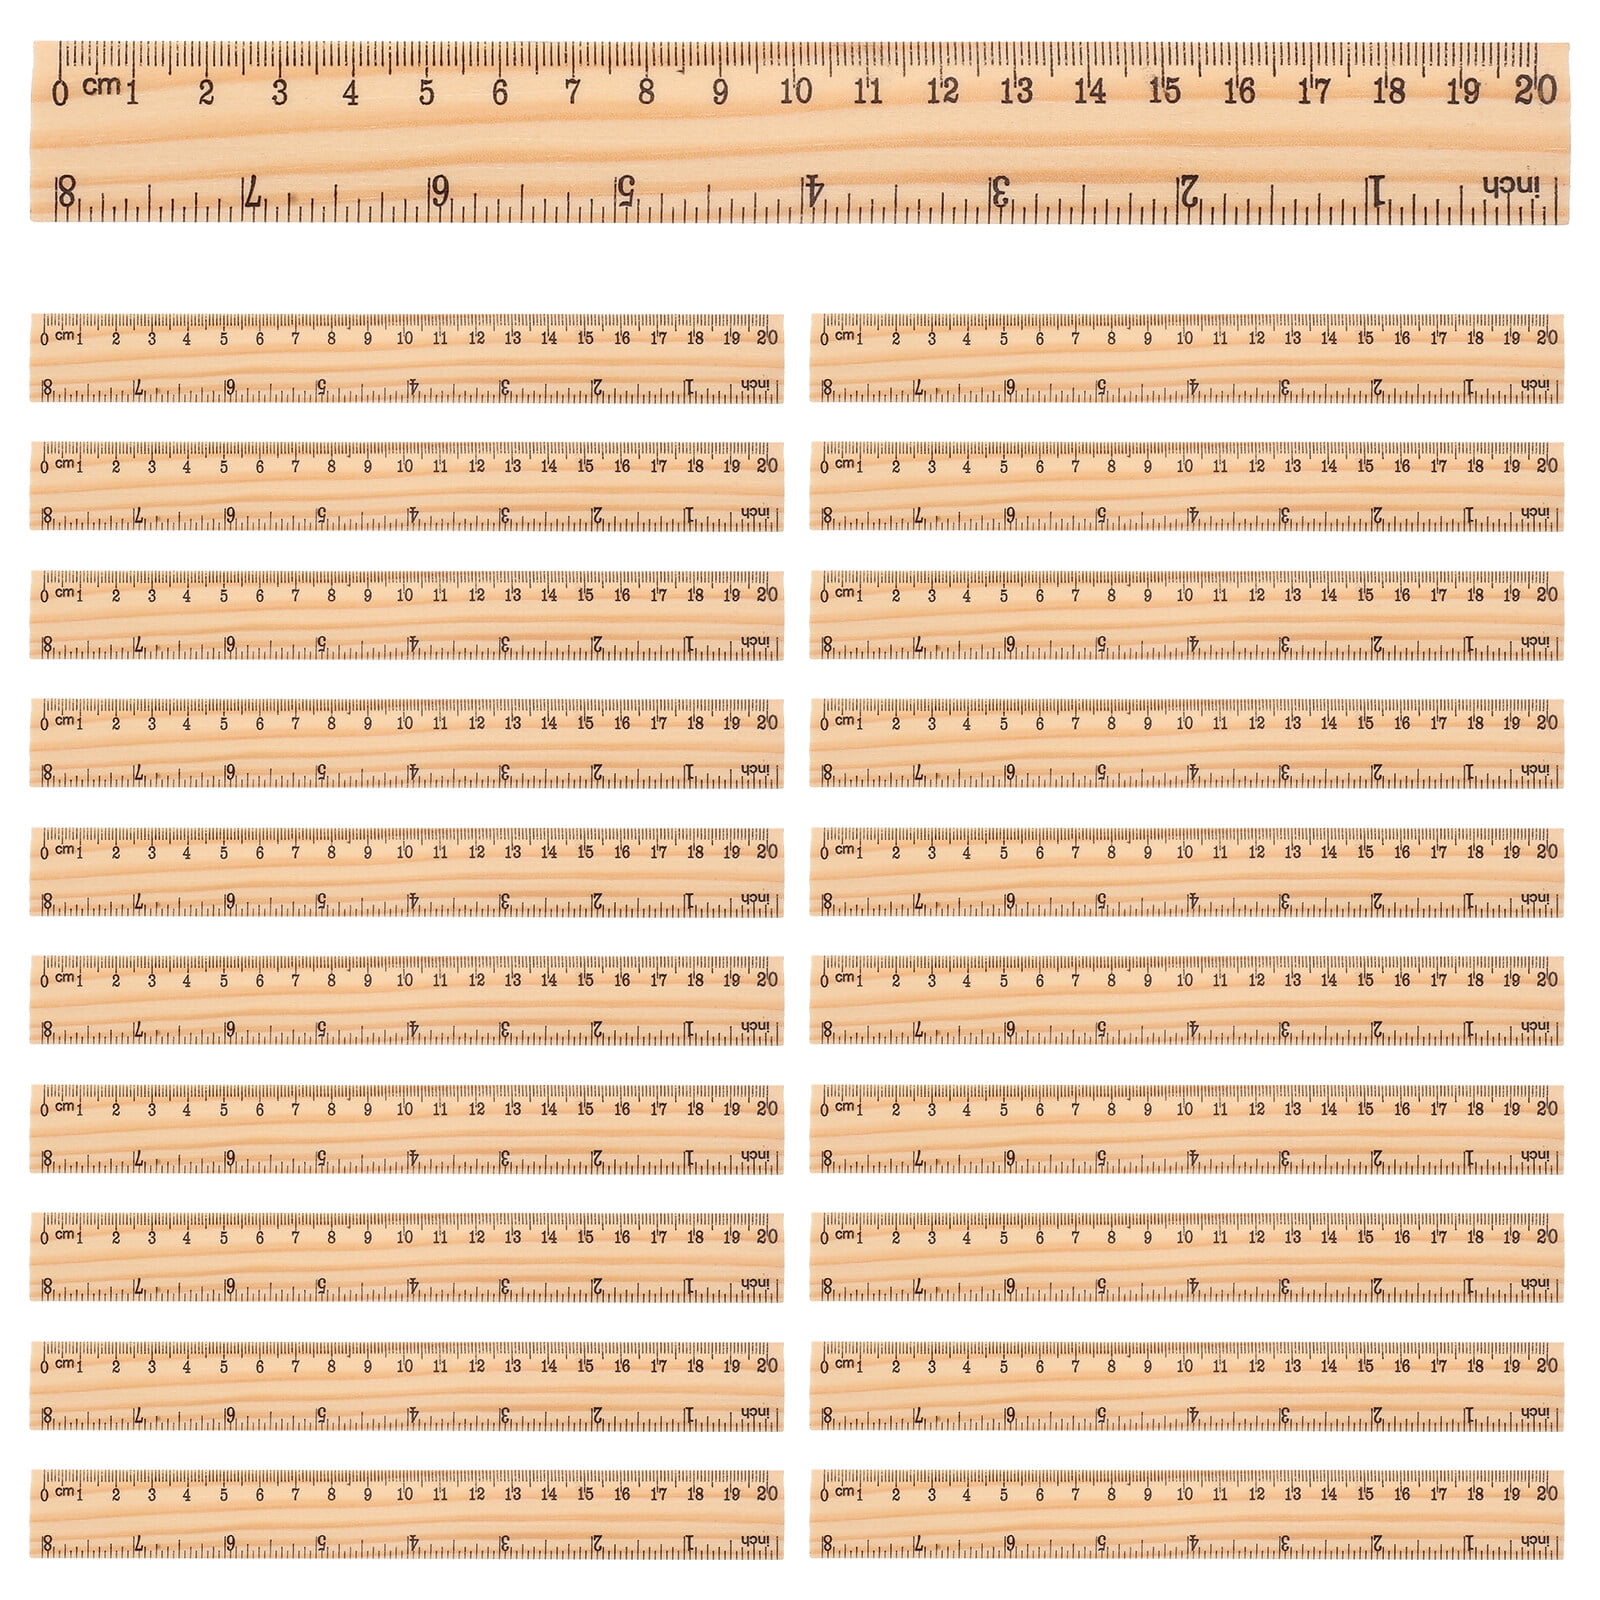 Selling 15cm 20cm 30cm Log Wooden Ruler Wooden Ruler Double Sided Student  Office School Measuring Tool